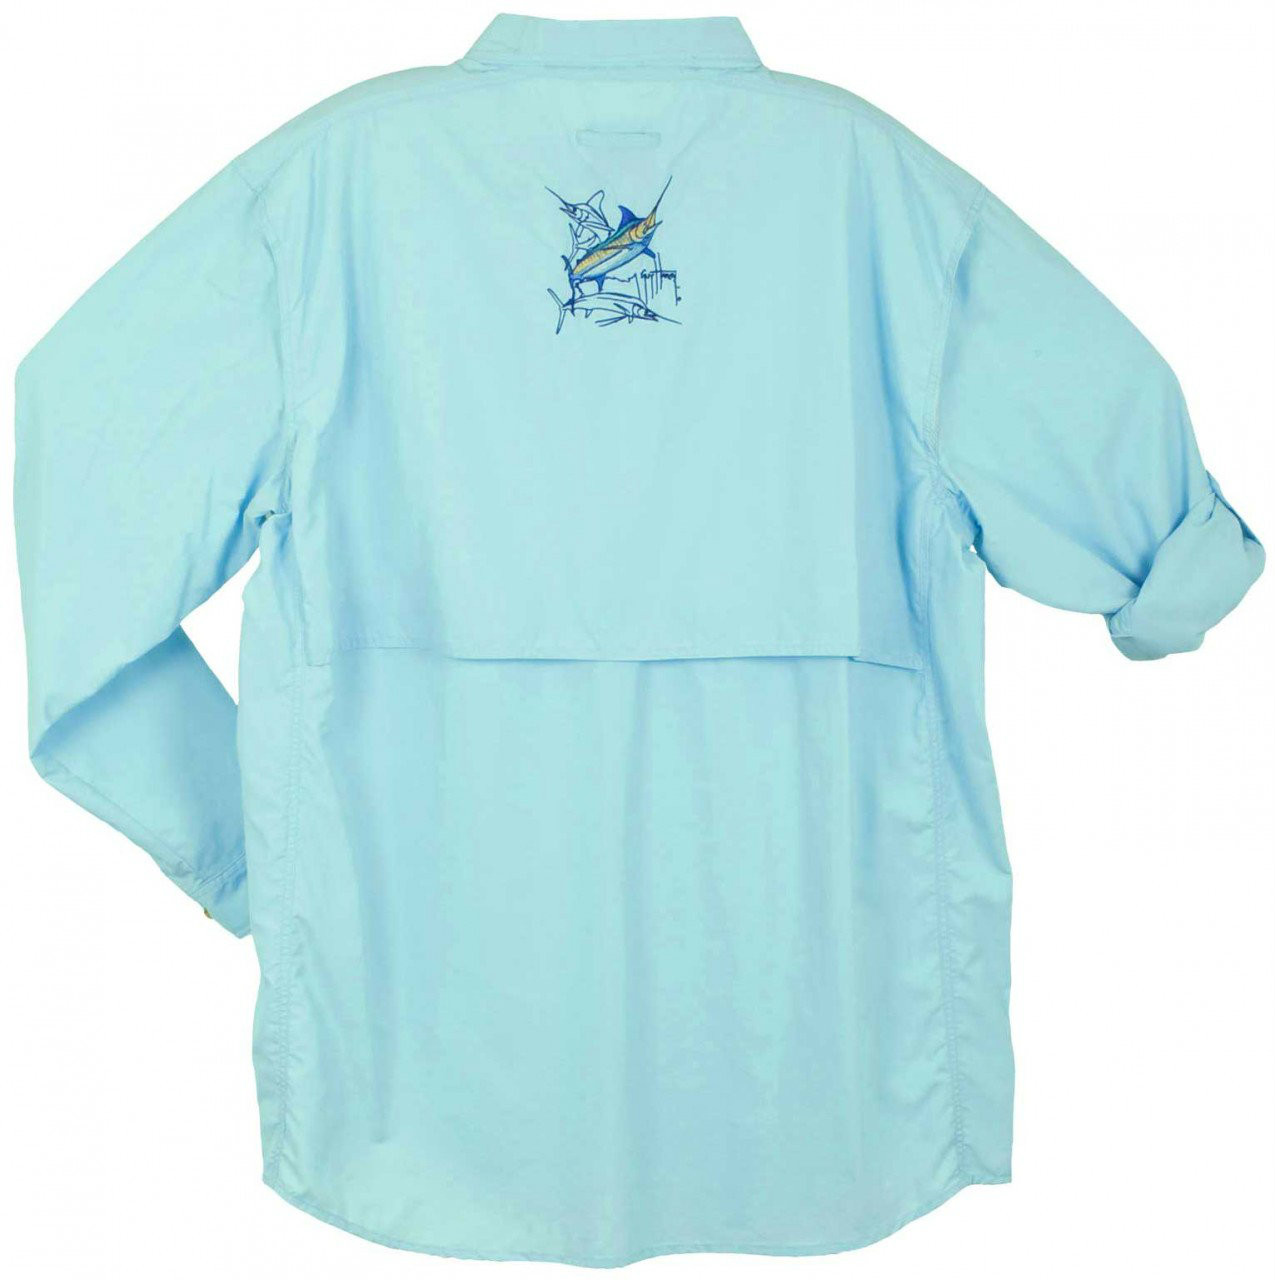 Guy Harvey Grand Slam Technical Fishing Shirt (Long or Short Sleeve) in  Aqua Blue, Sky Blue, Yellow, Tan, Black, Kiwi, Melon or White